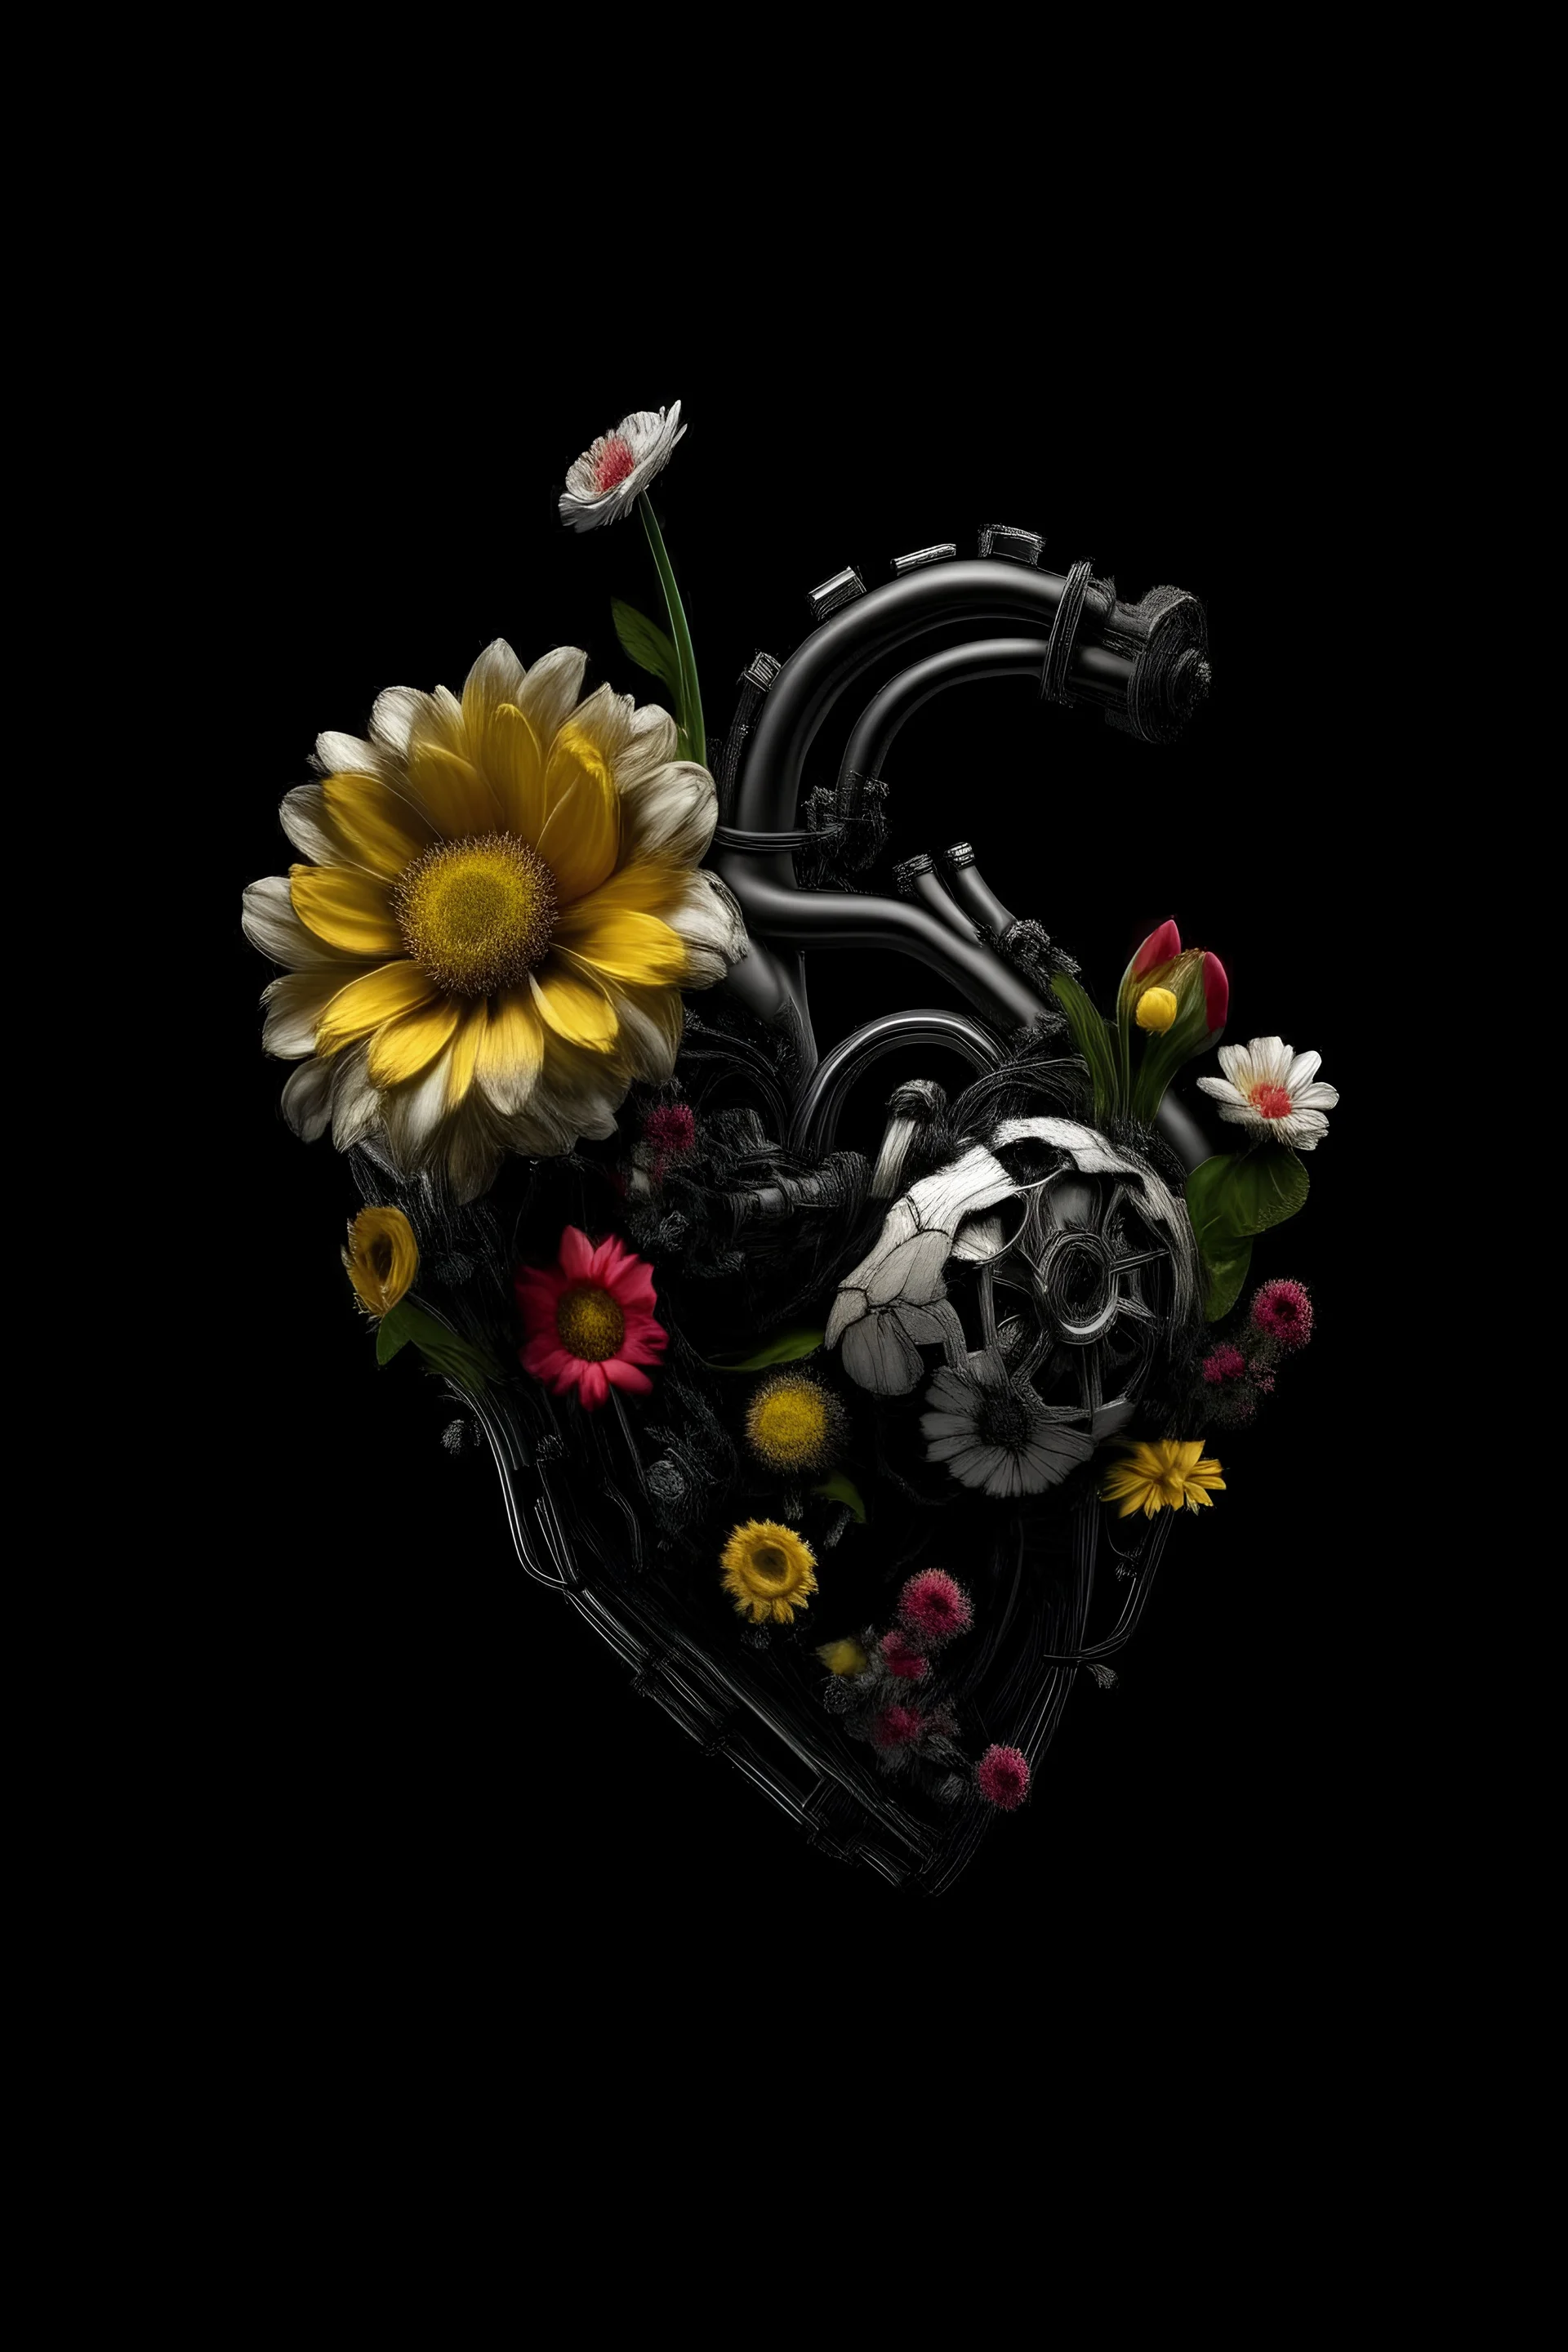 Flowers growing through human mechanic heart contemporary art, not so perfect, black